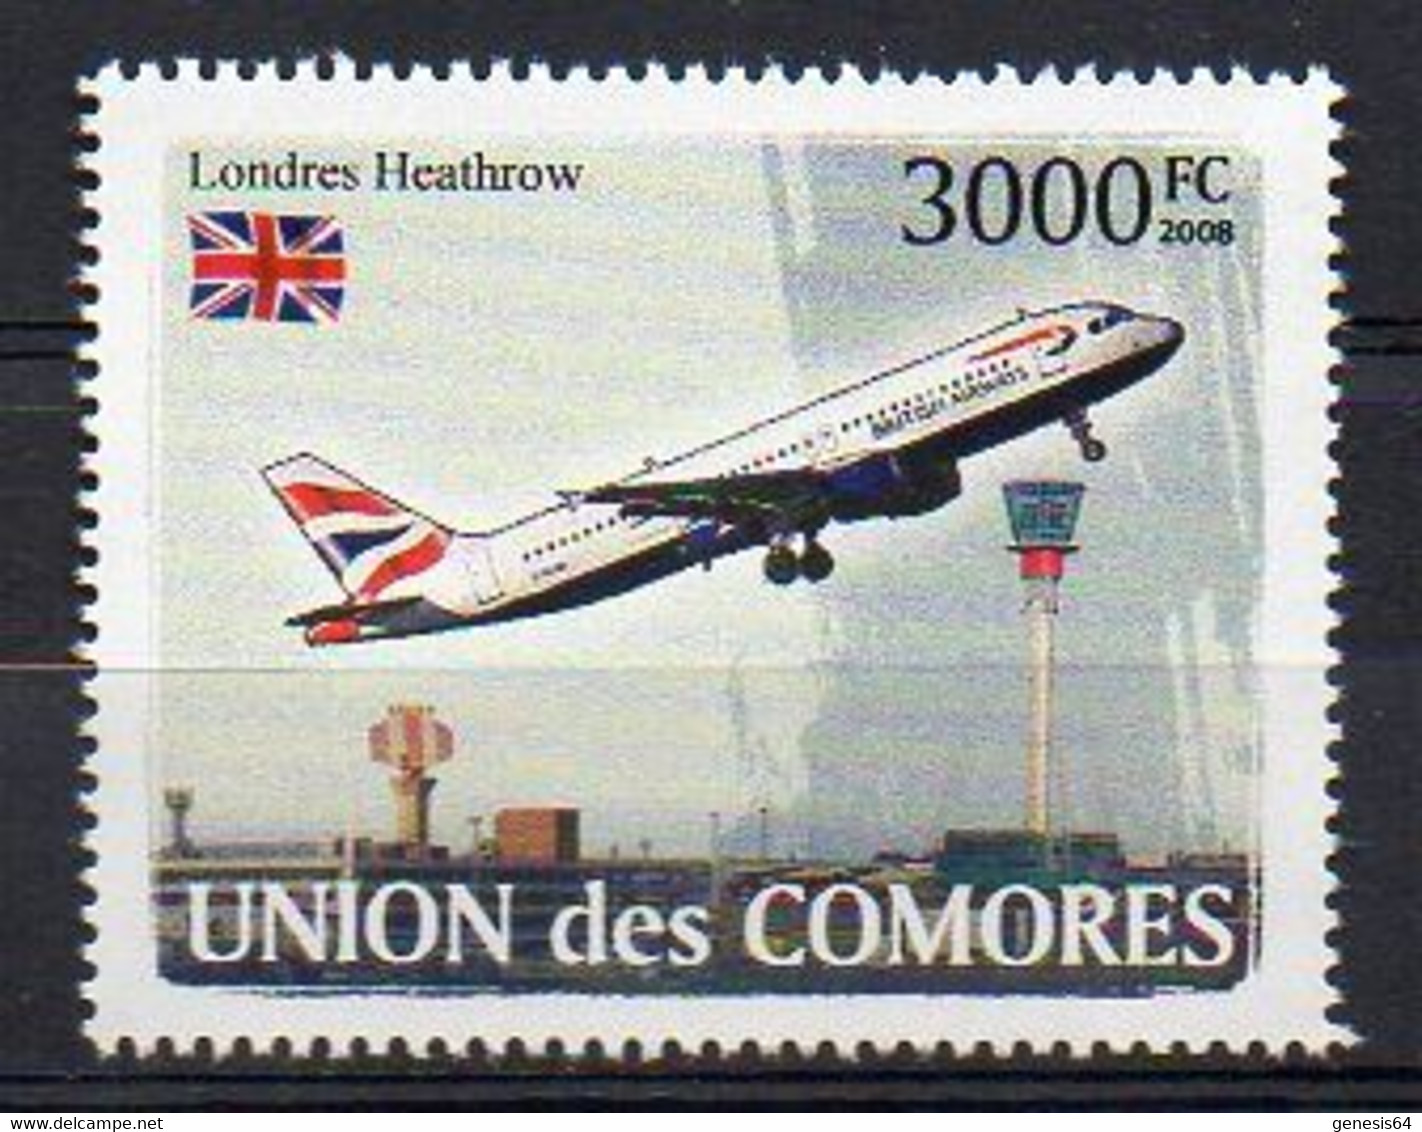 British Airways (BA) AIRBUS 318-100 Aircraft London Heathrow Airport Stamp (Comoros 2008) - MNH (1W2750) - Aerei